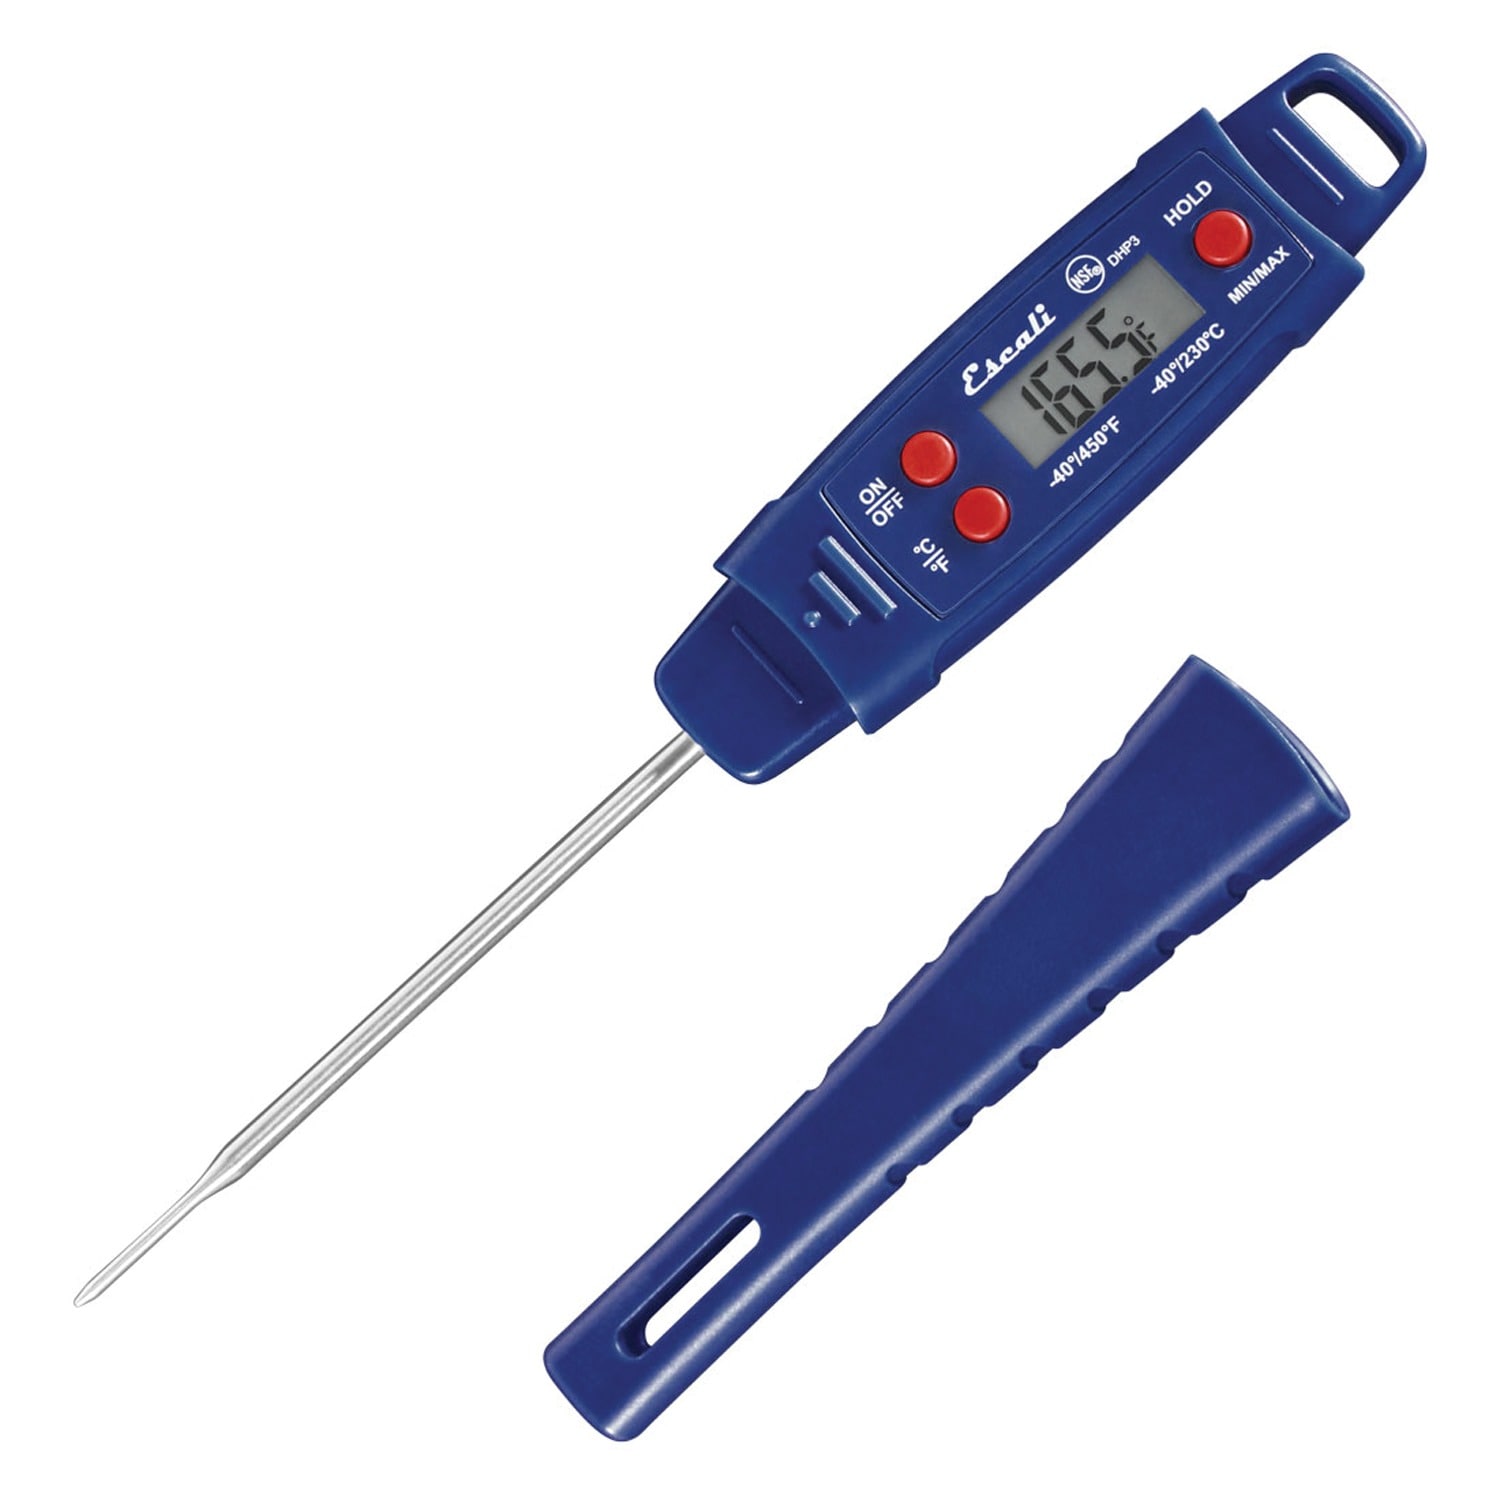 Escali - Folding Digital Thermometer